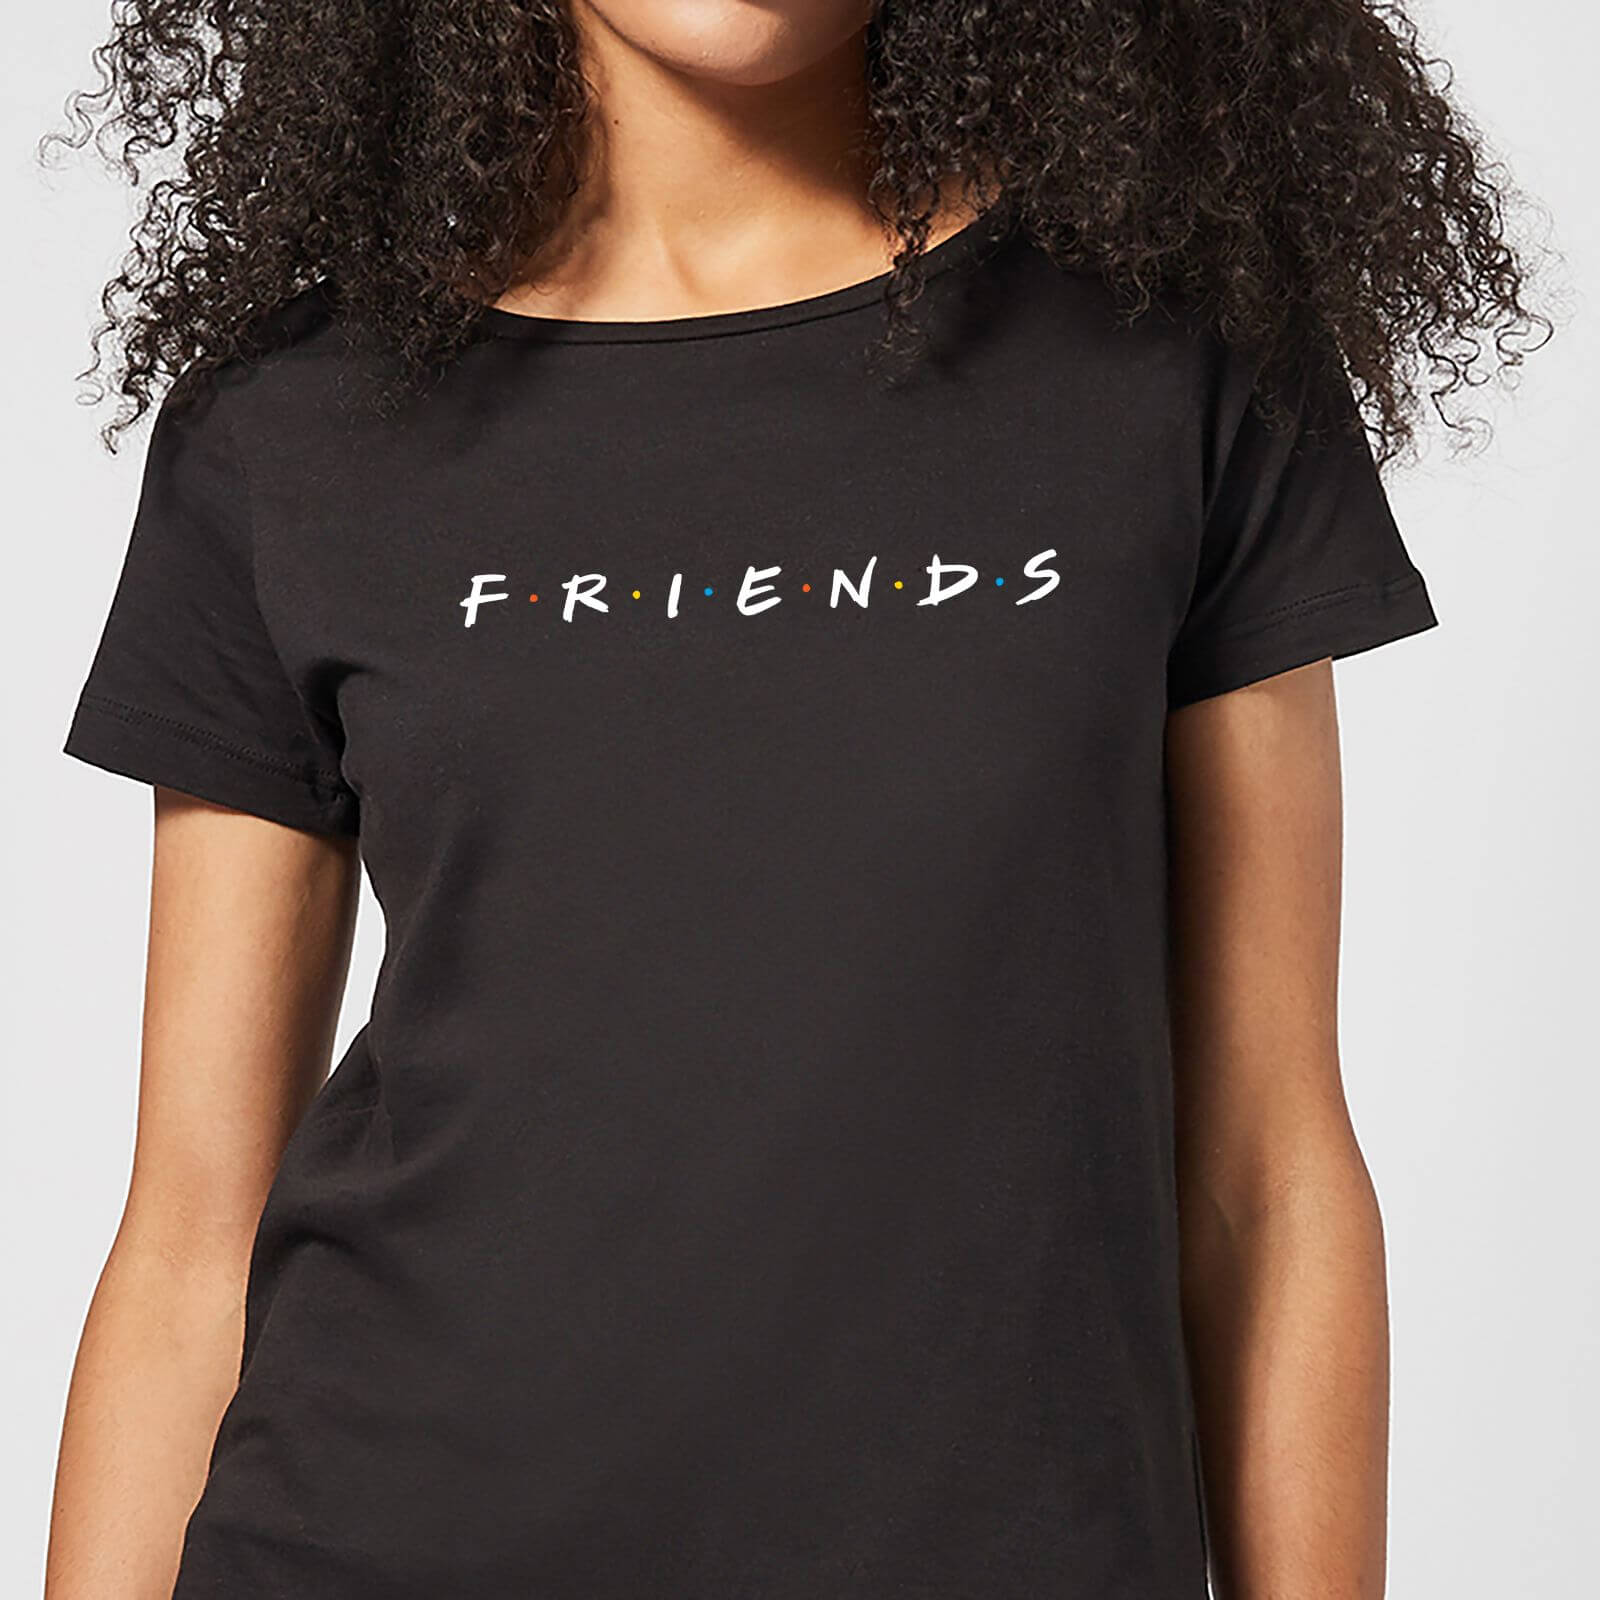 Friends Logo Women's T-Shirt - Black - S